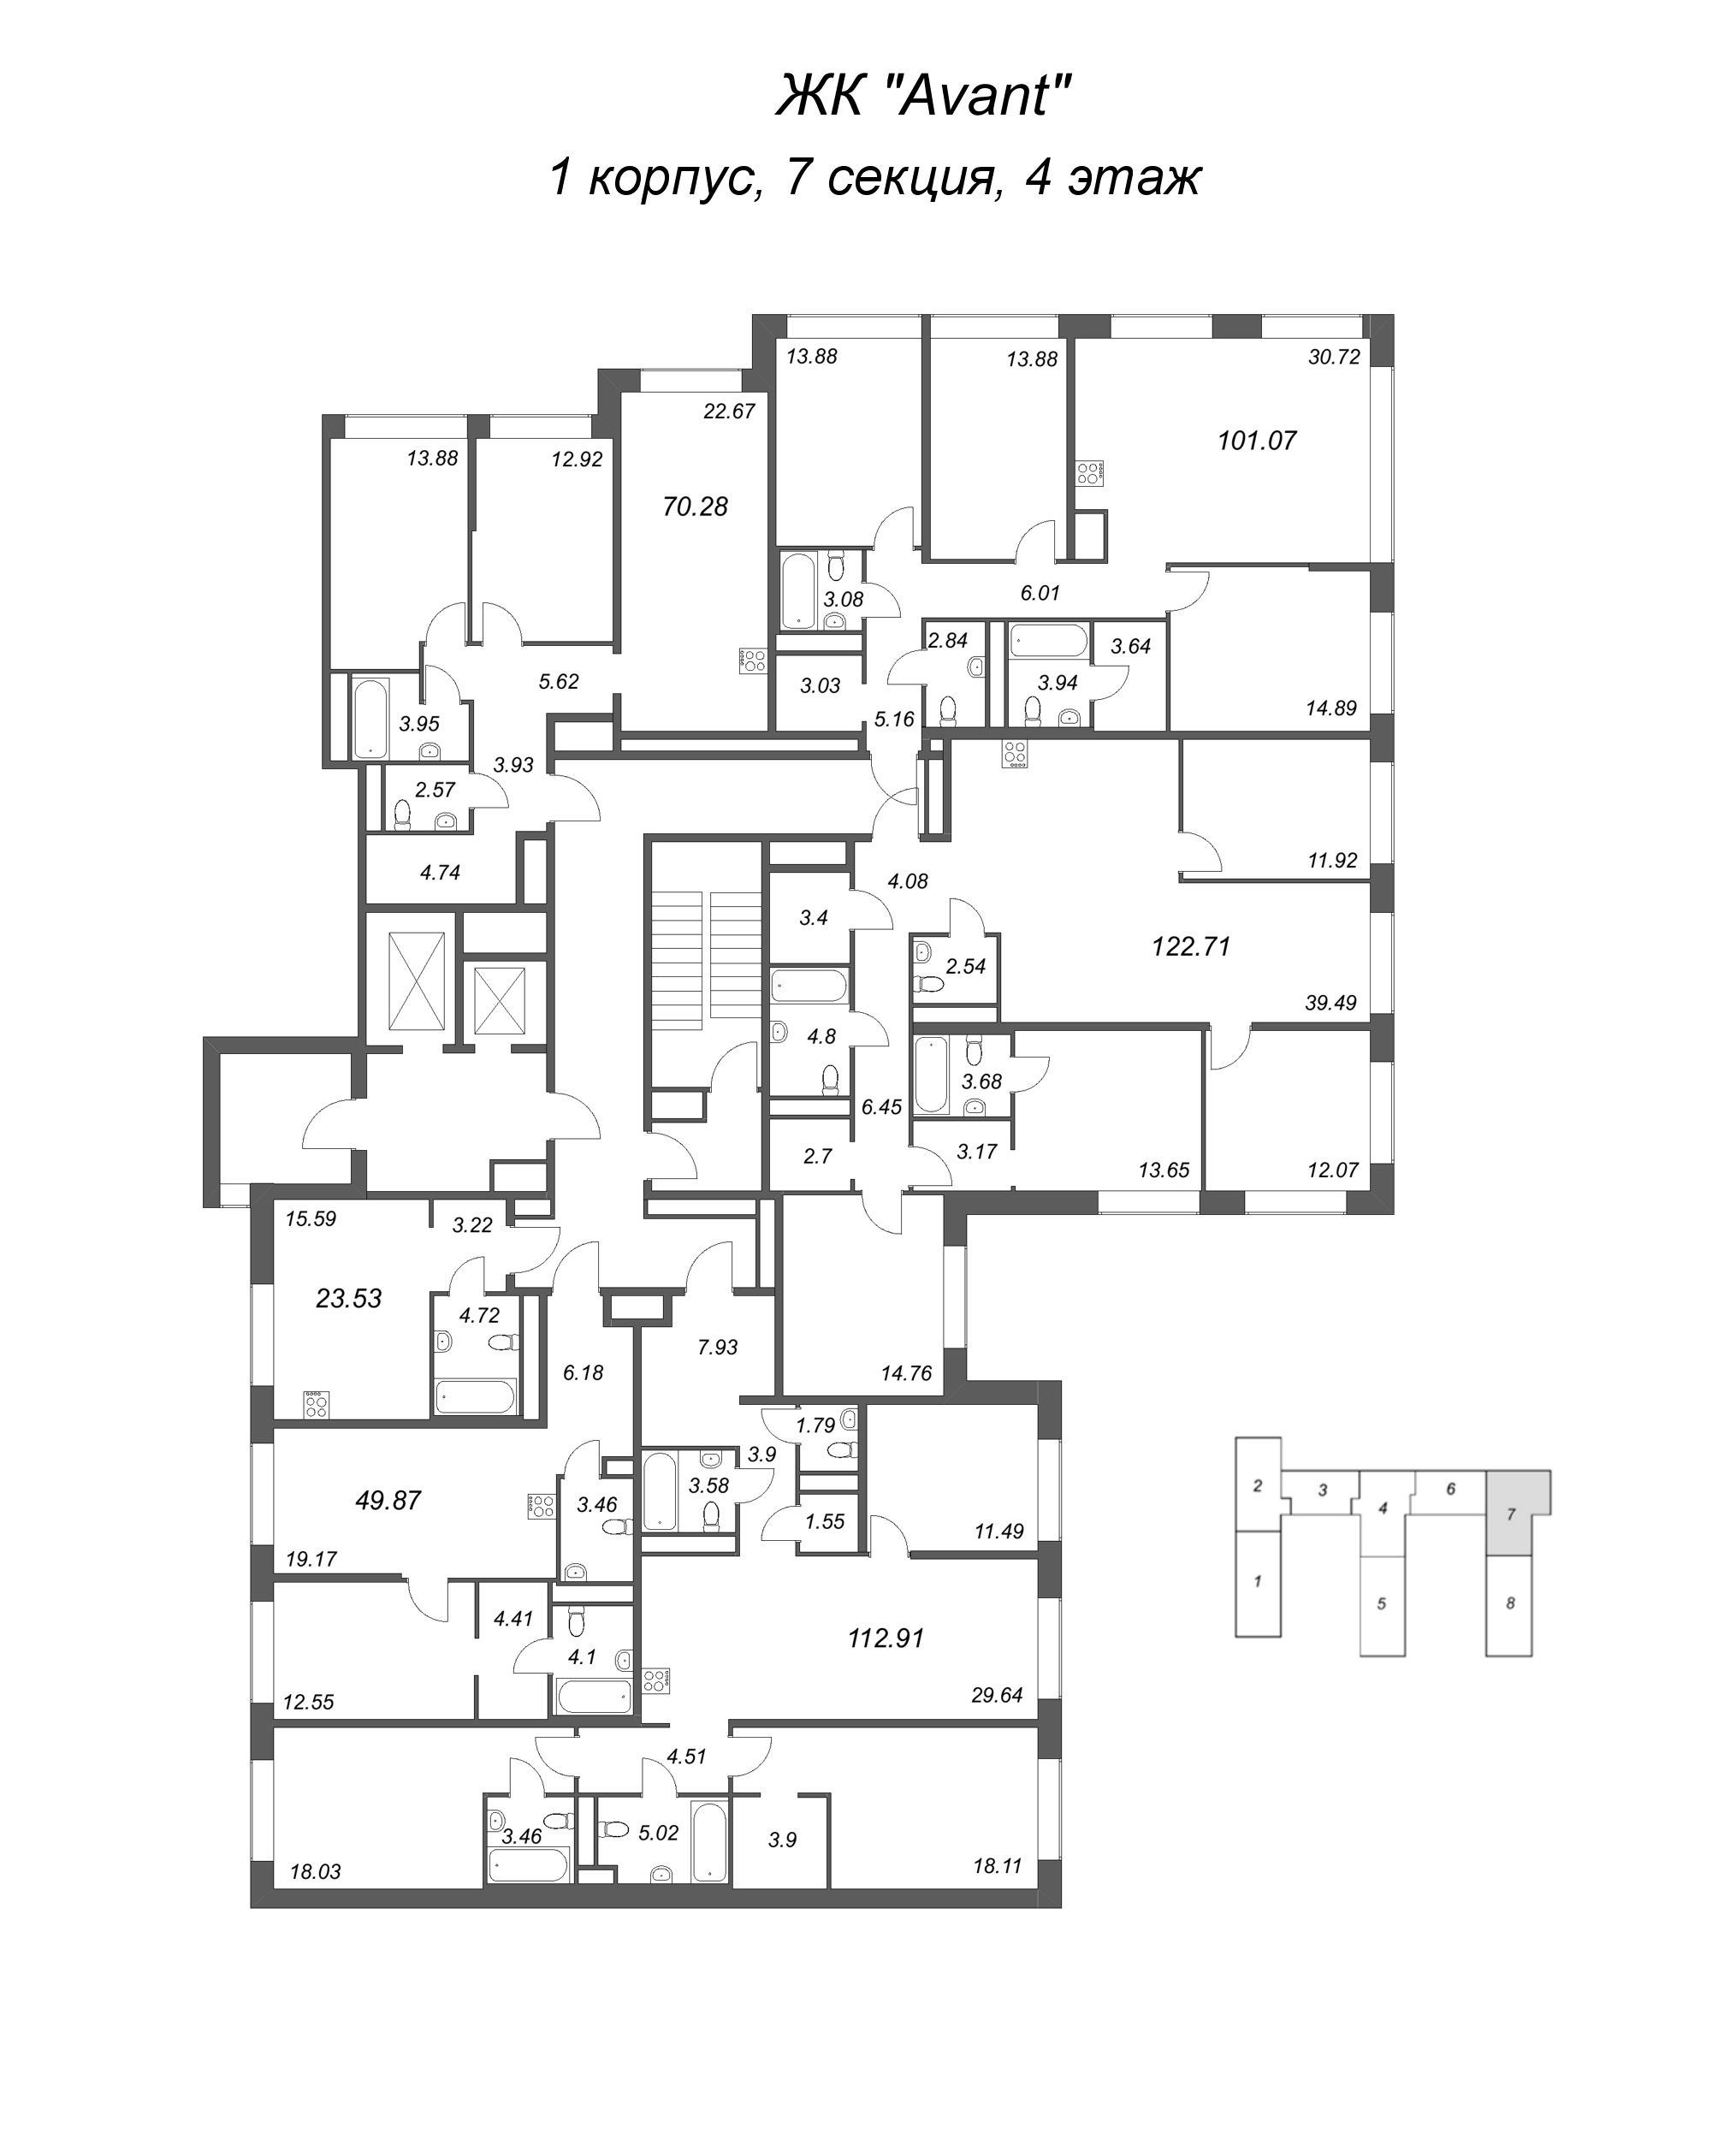 4-комнатная (Евро) квартира, 112.91 м² - планировка этажа